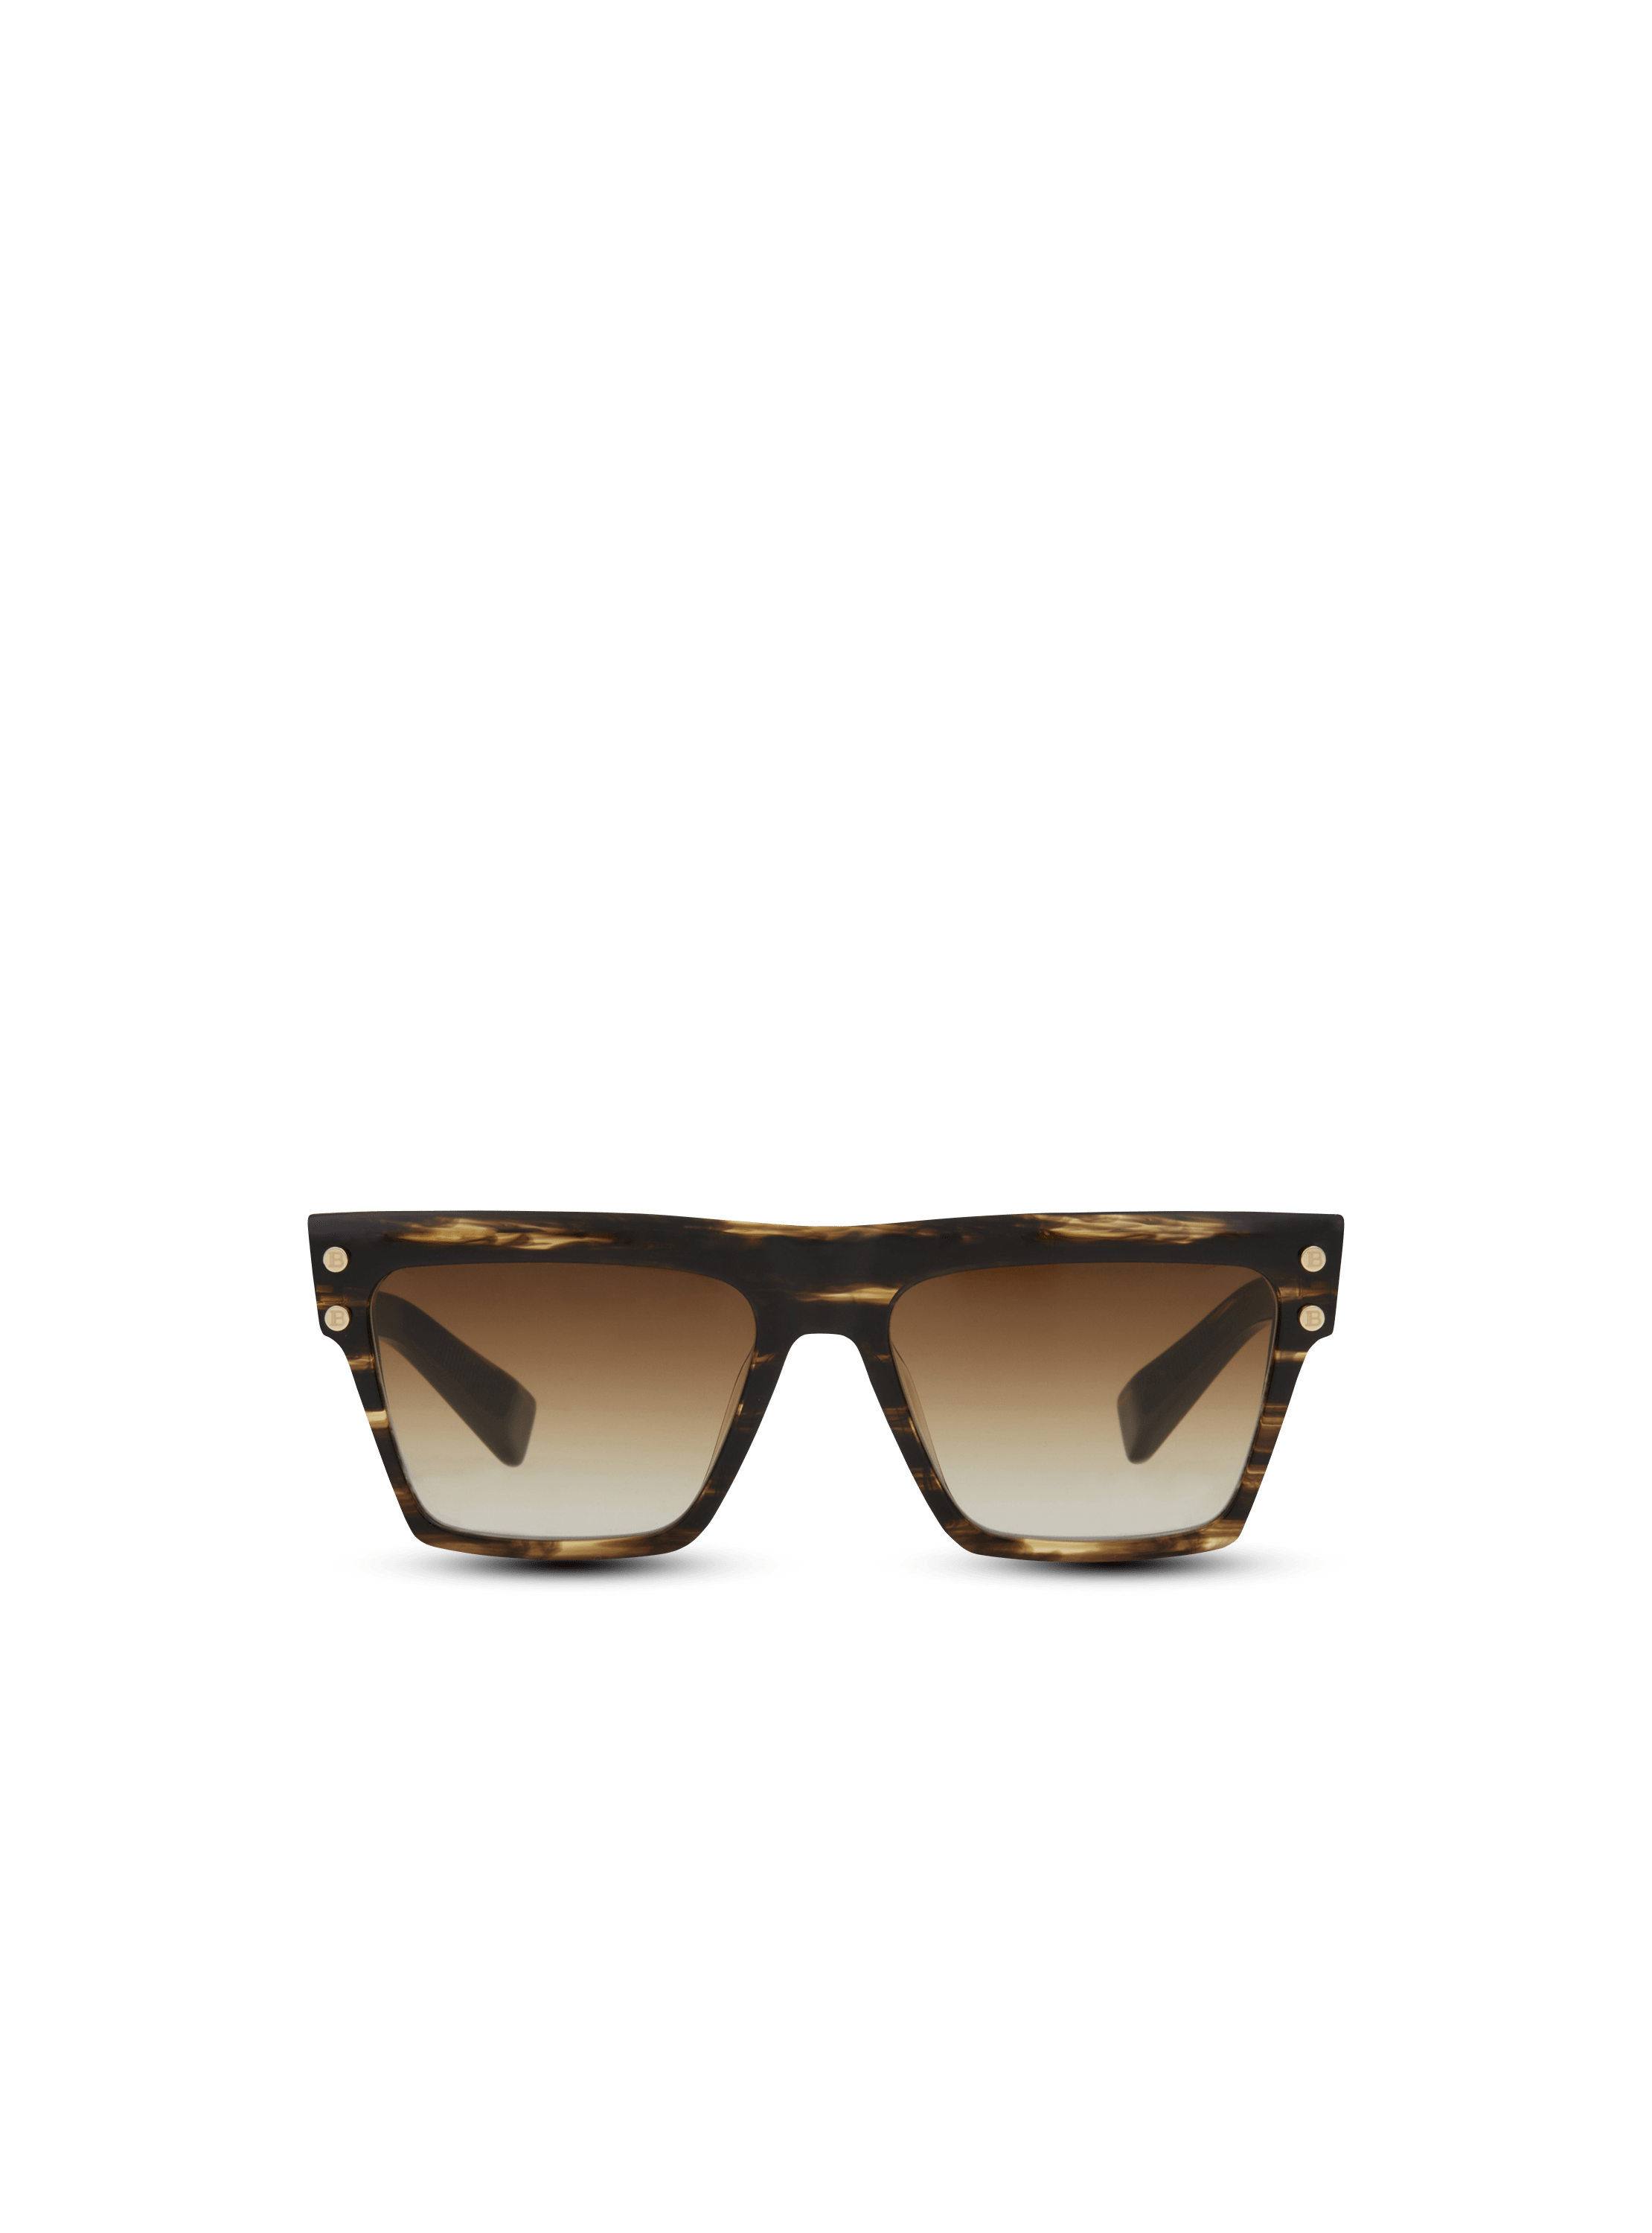 B-V sunglasses